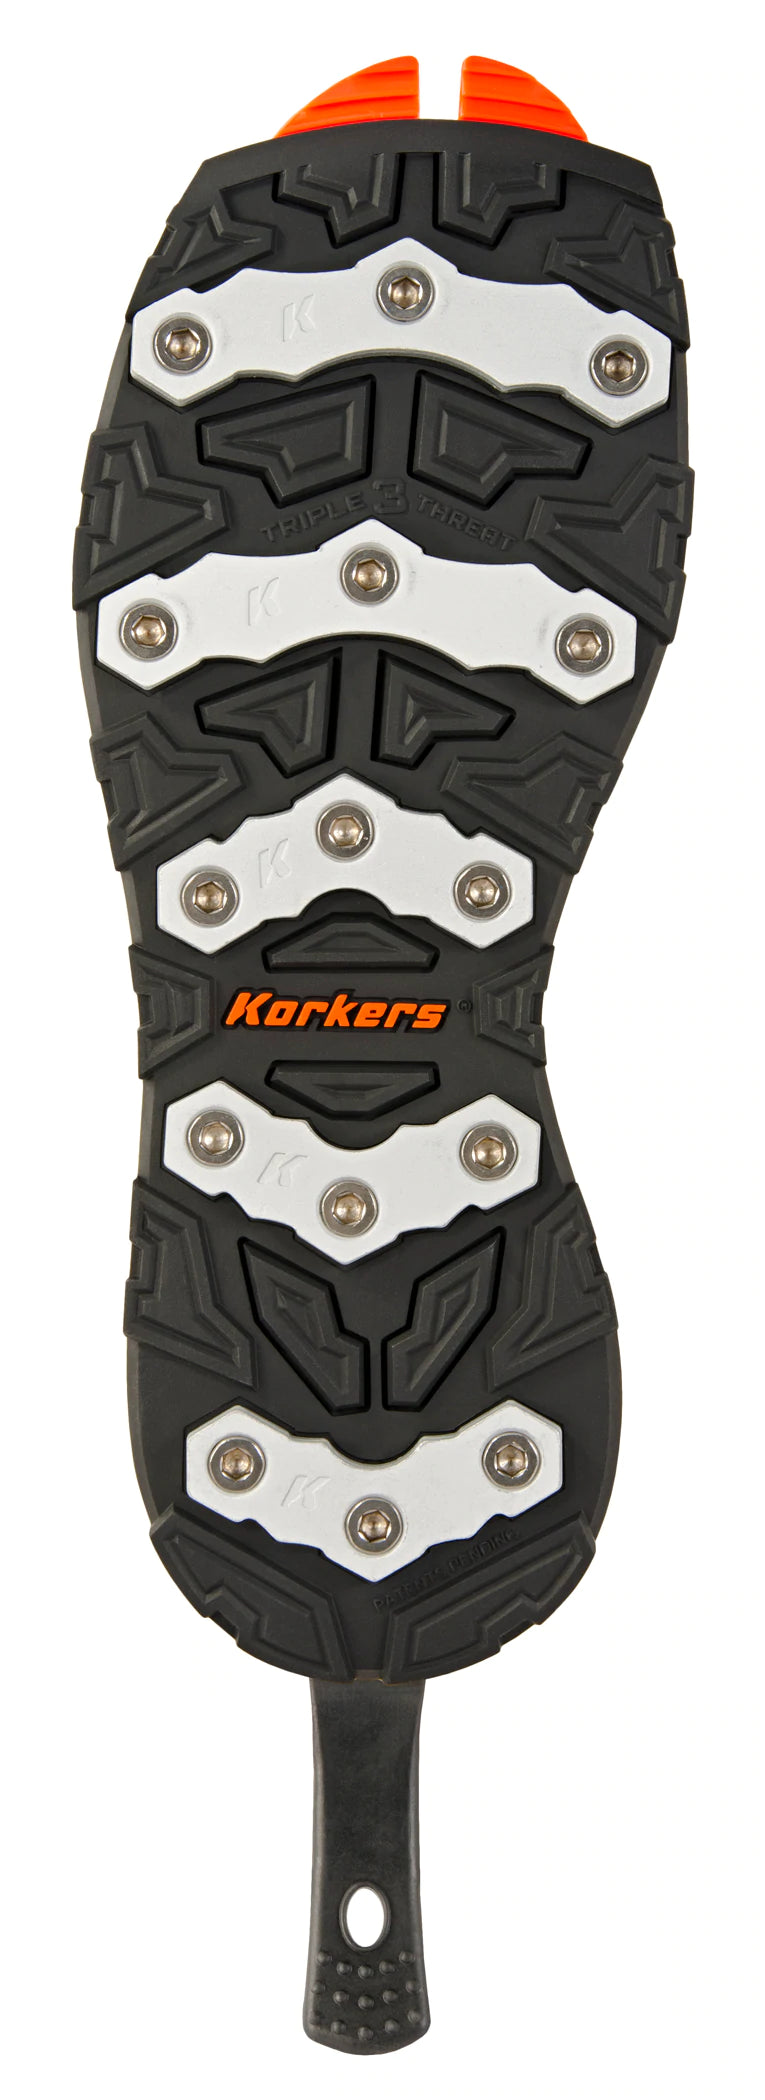 Korkers OmniTrax v3.0 Interchangeable Sole - Triple Threat Aluminum Bar - Black/Orange